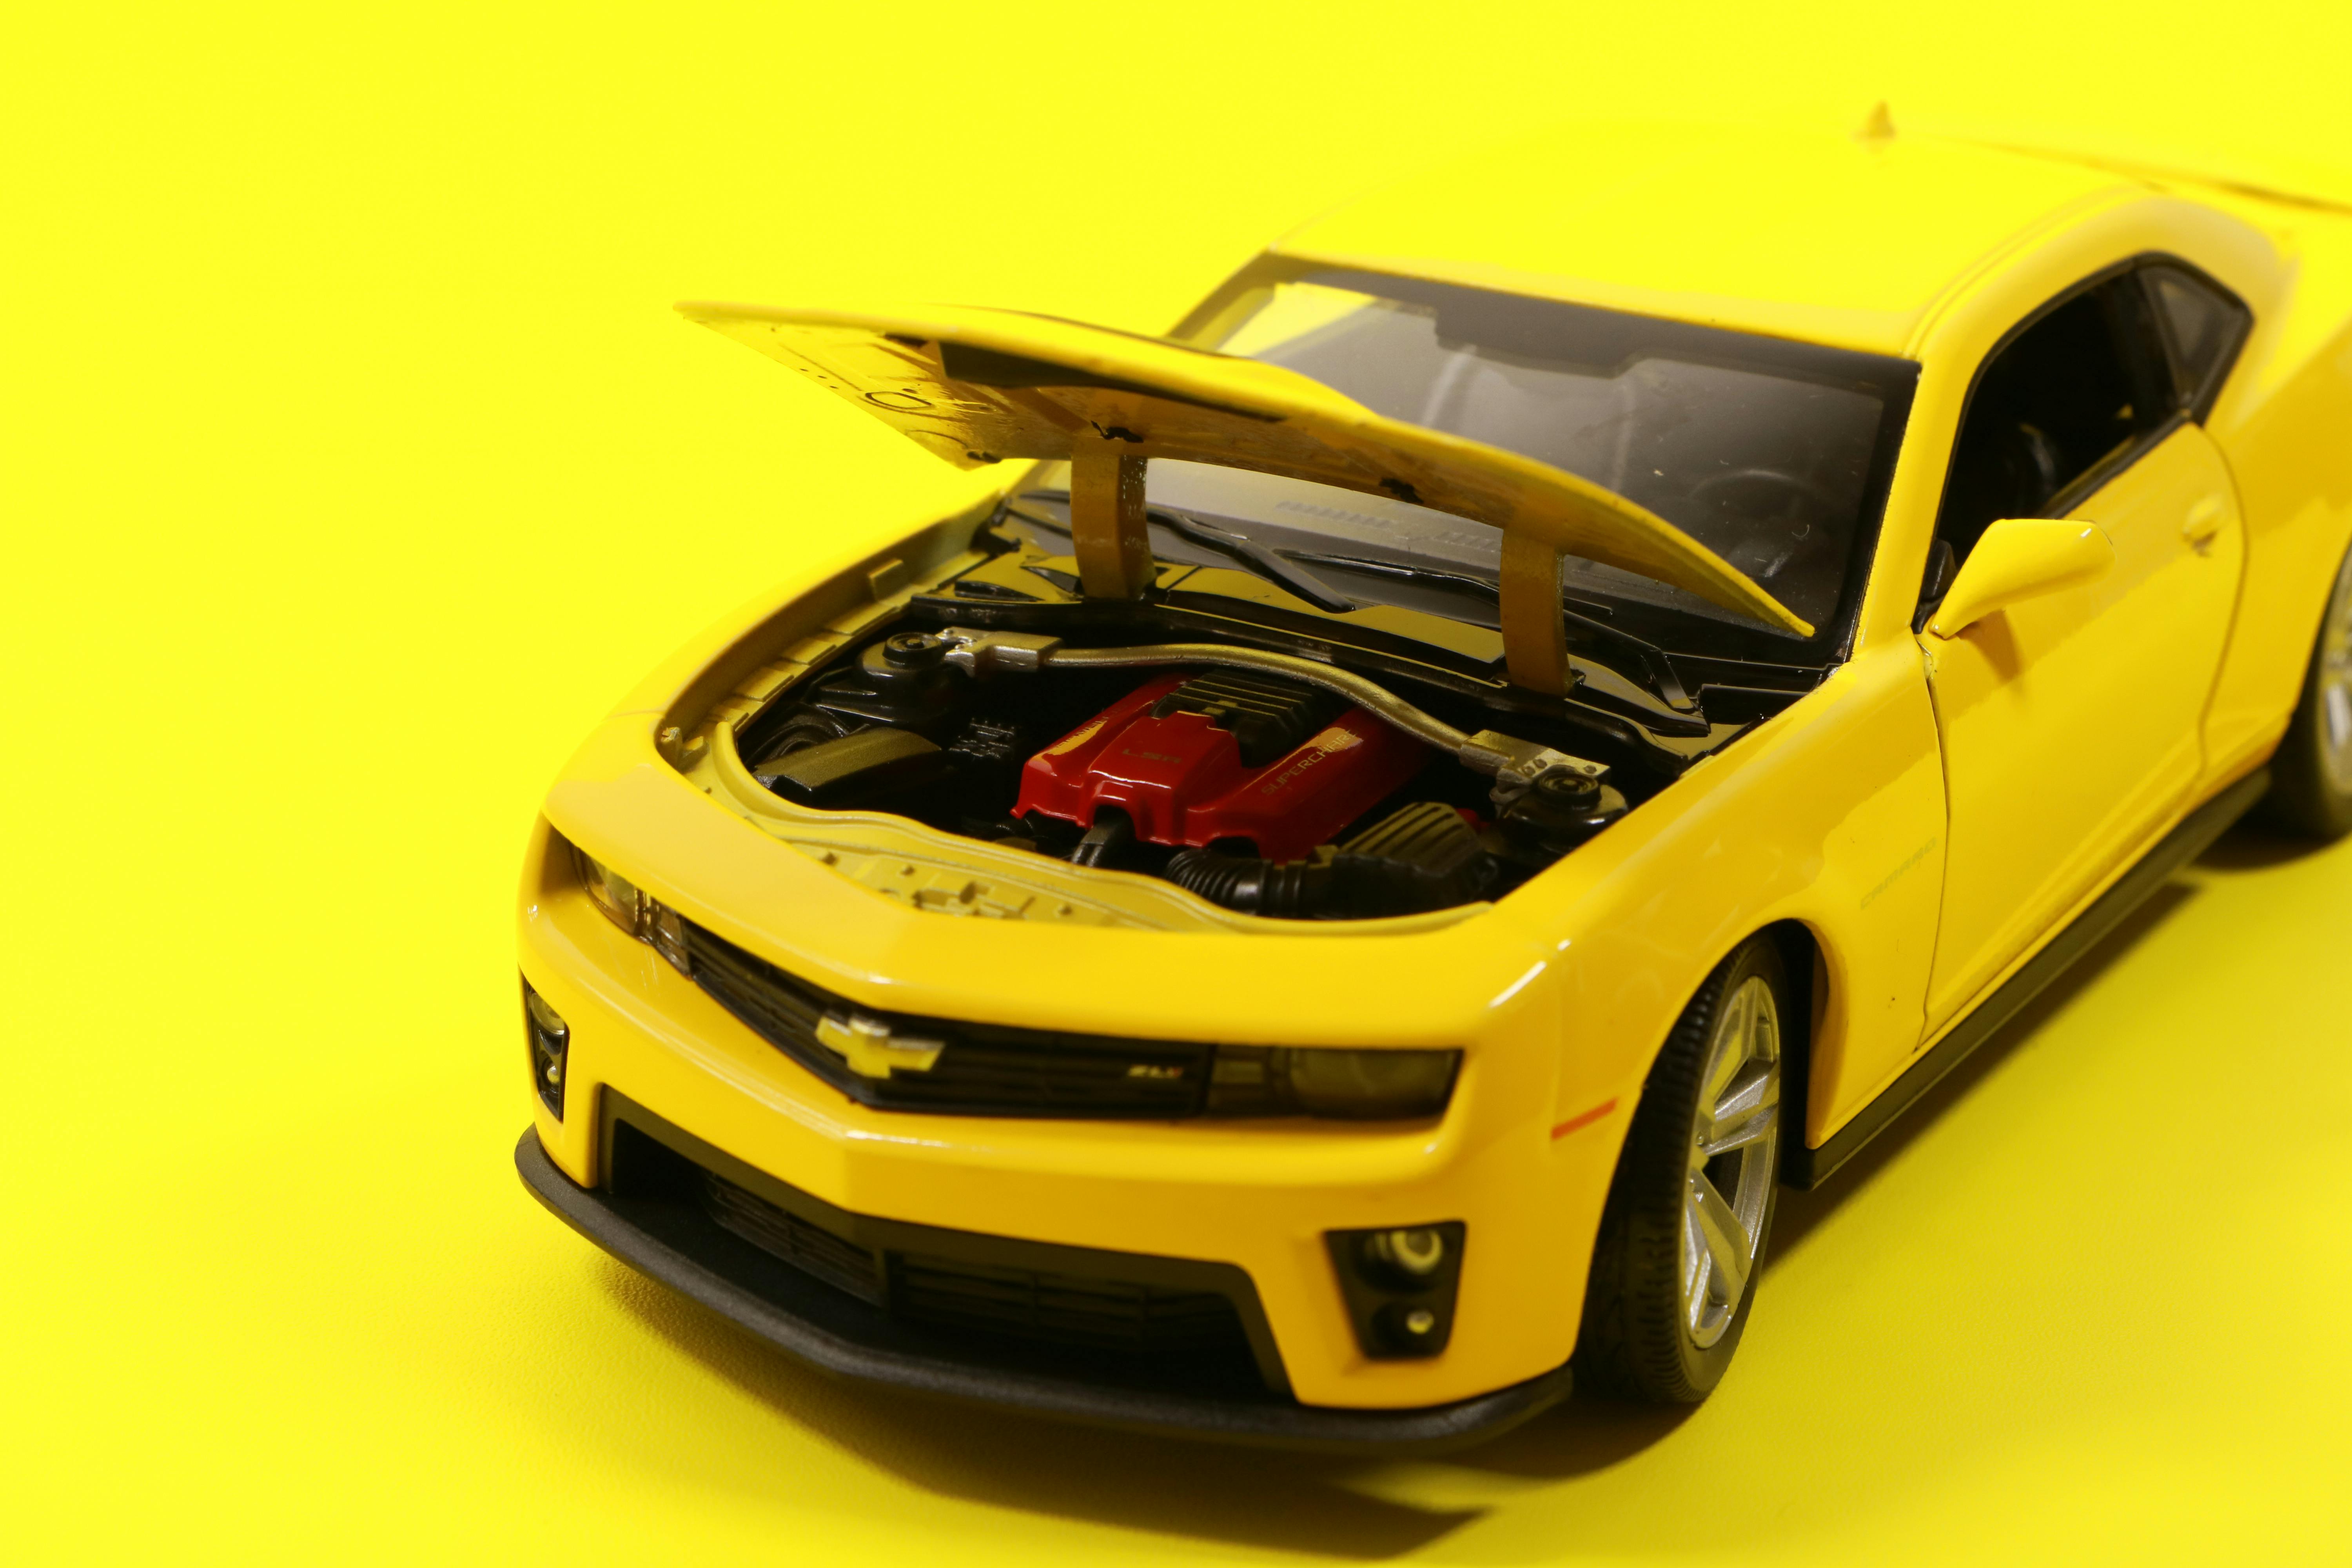 Yellow Chevrolet Camaro Die-cast Model